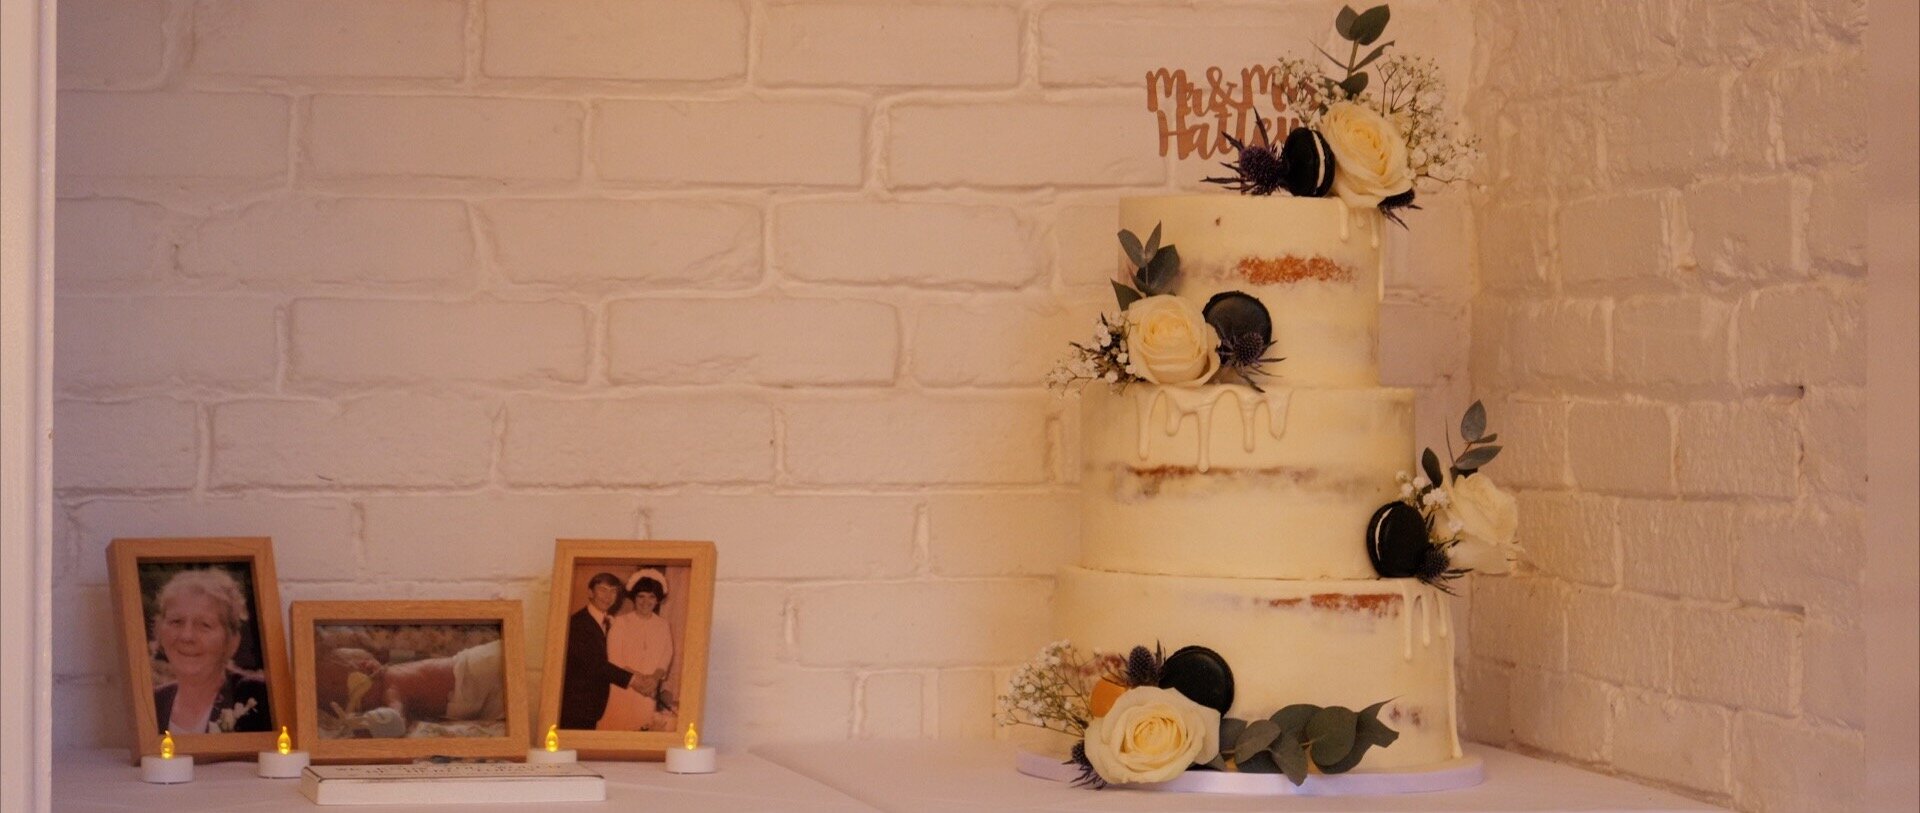 Old Parish Rooms Wedding Cake Video.jpg